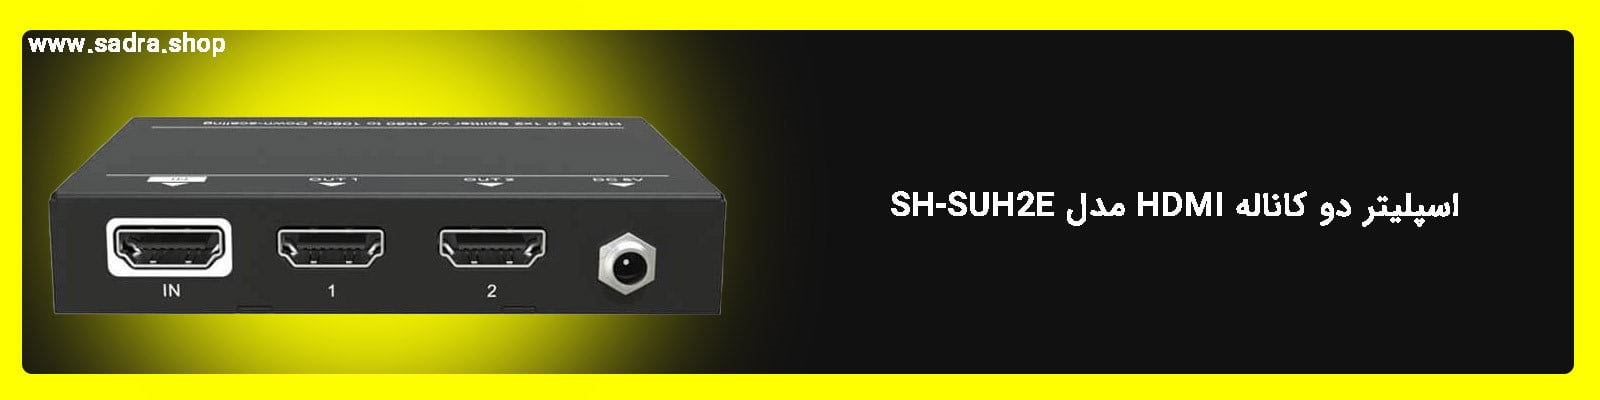 اسپلیتر دو کاناله HDMI مدل SH-SUH2E